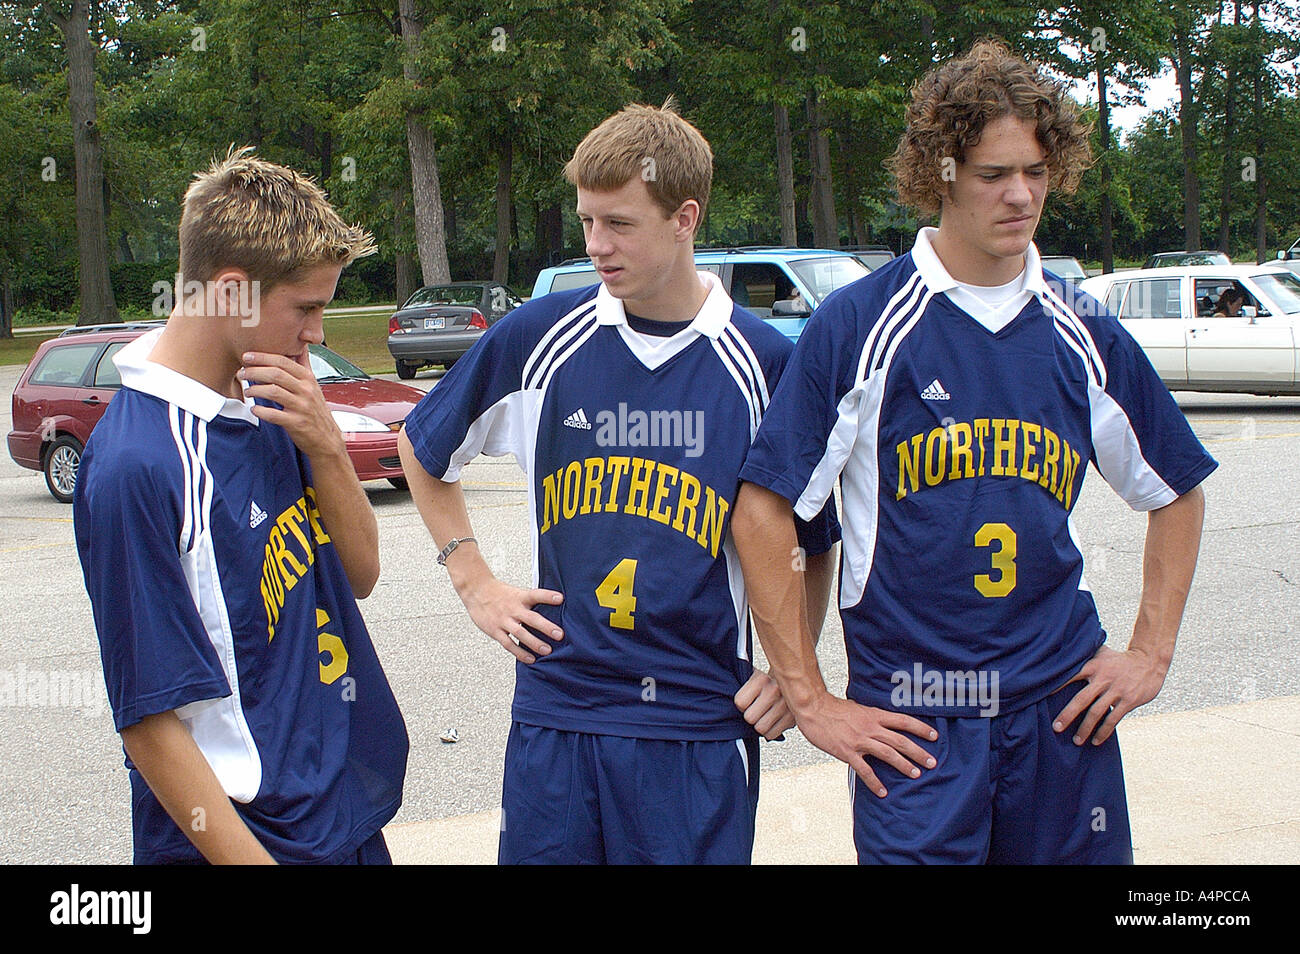 high school soccer uniforms